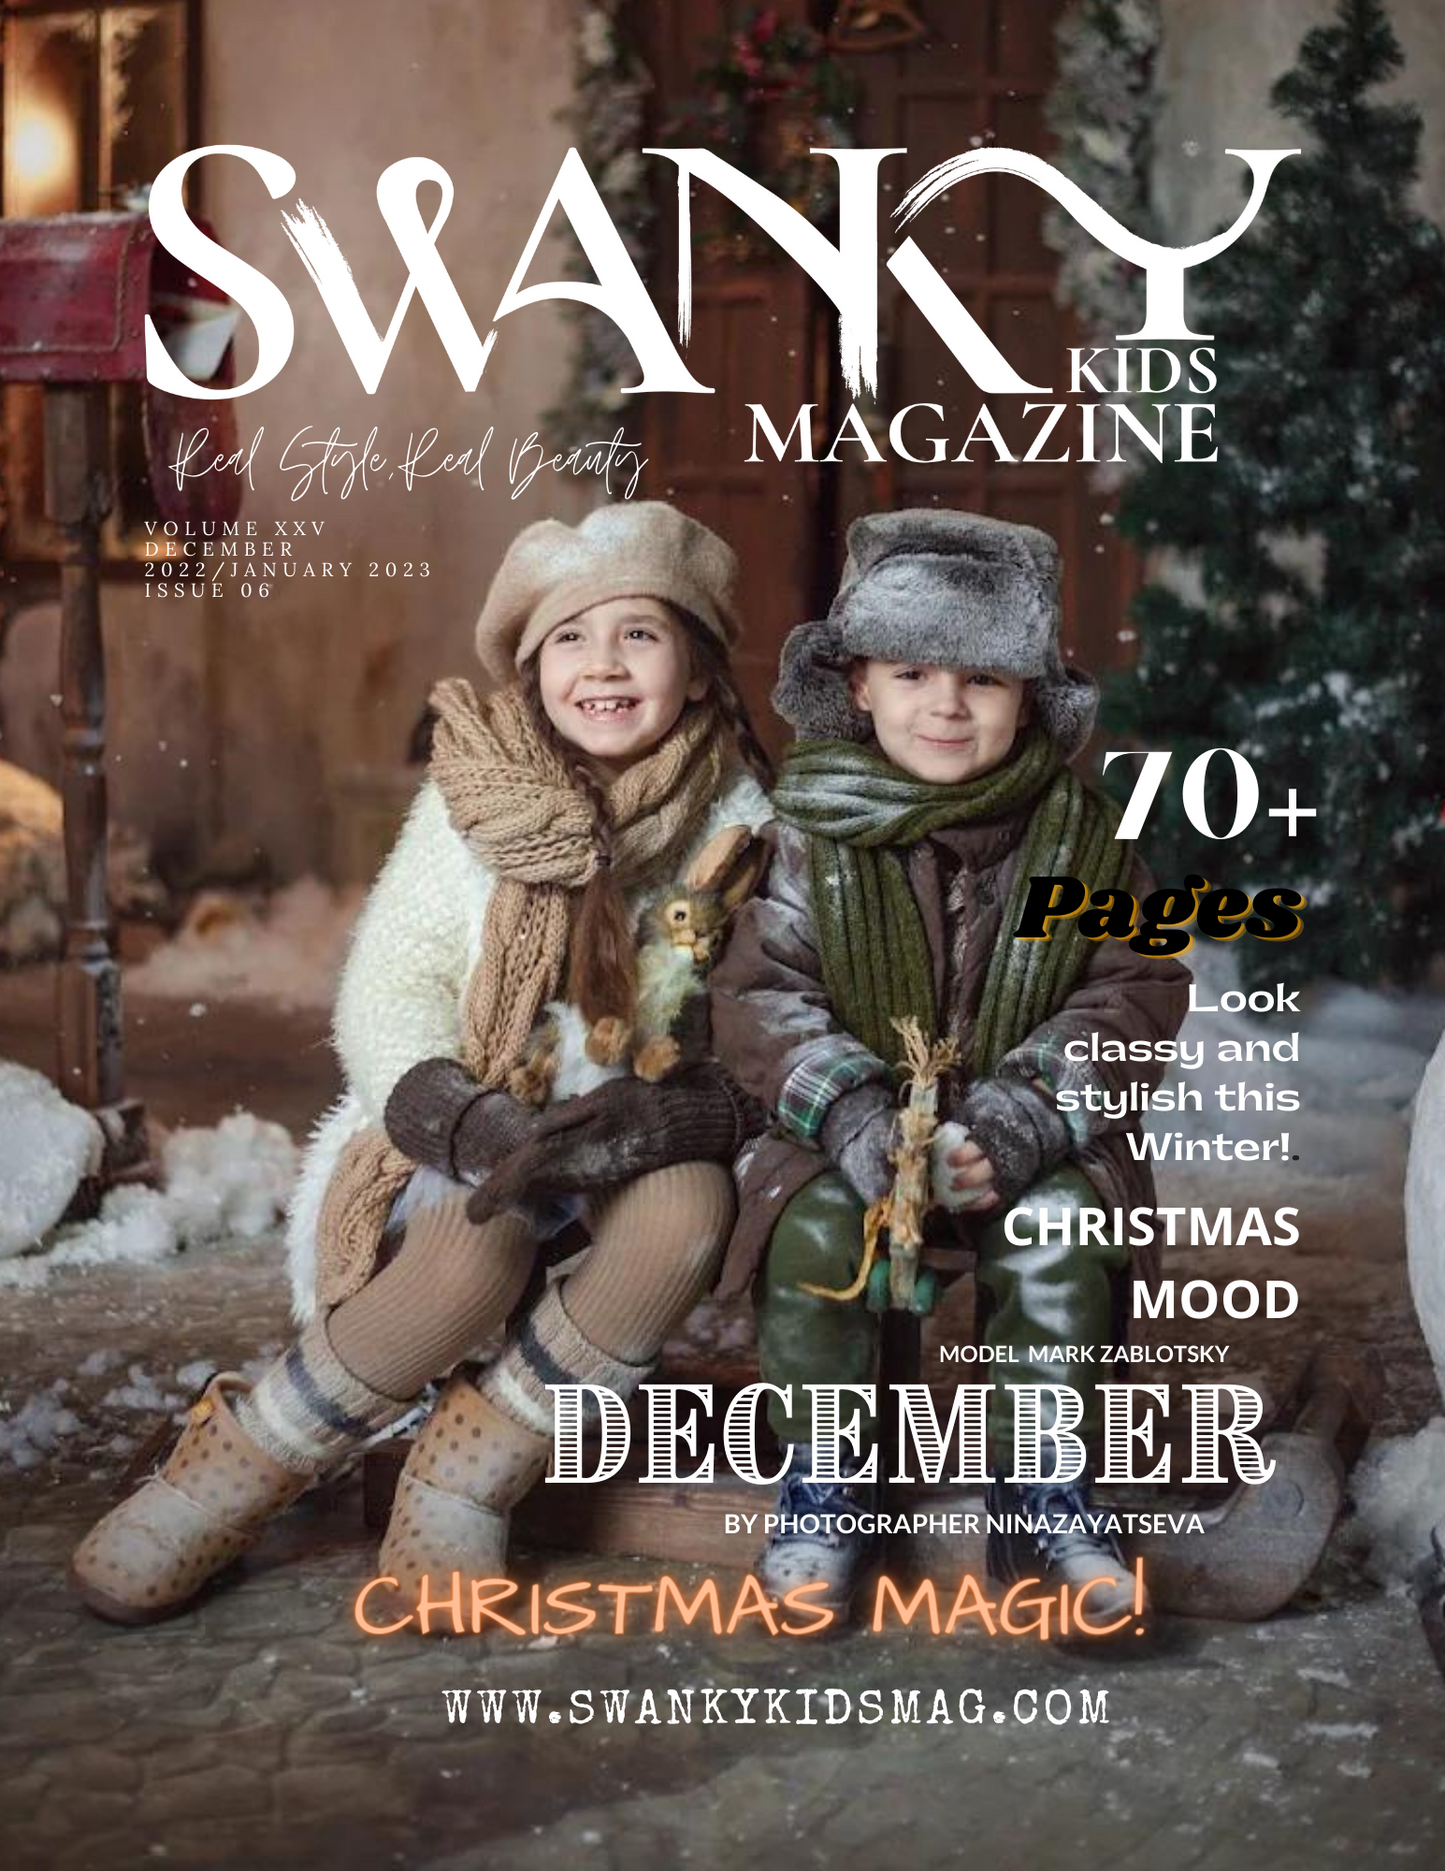 Swanky Kids Christmas Special Editions Dec/Jan 2022/2023 VOL XXV Issue 06